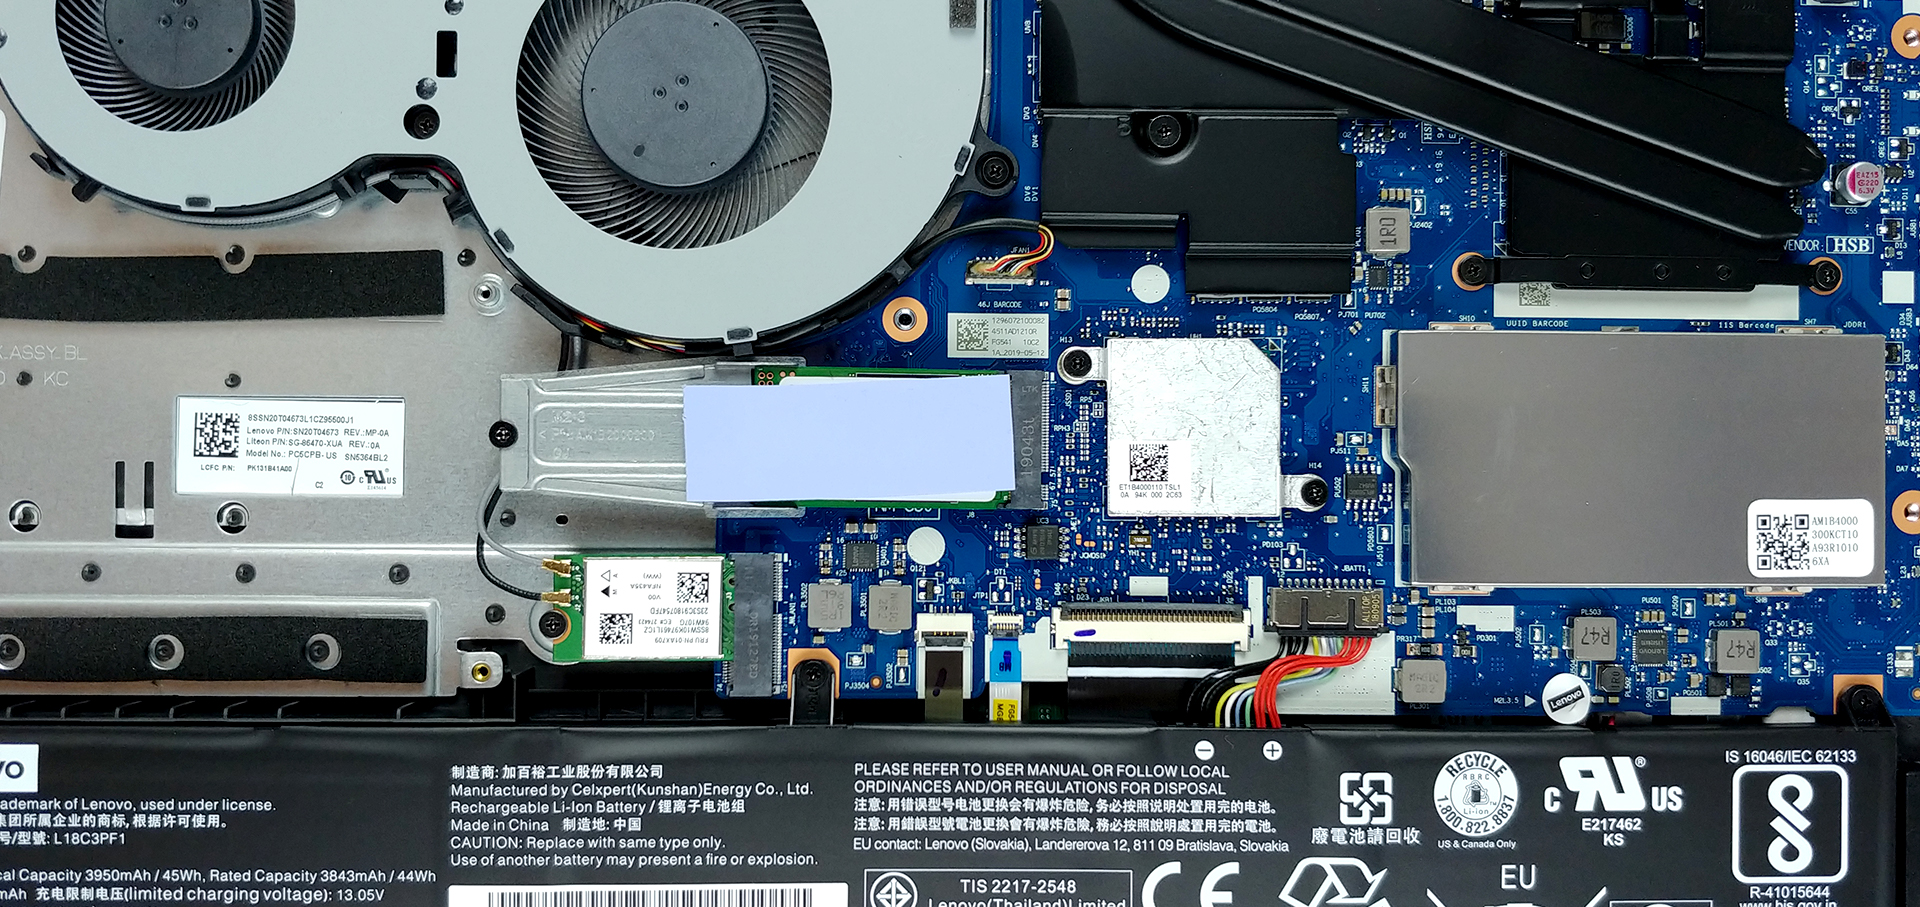 Inside Lenovo L340 Gaming (15") - disassembly and upgrade options | LaptopMedia.com